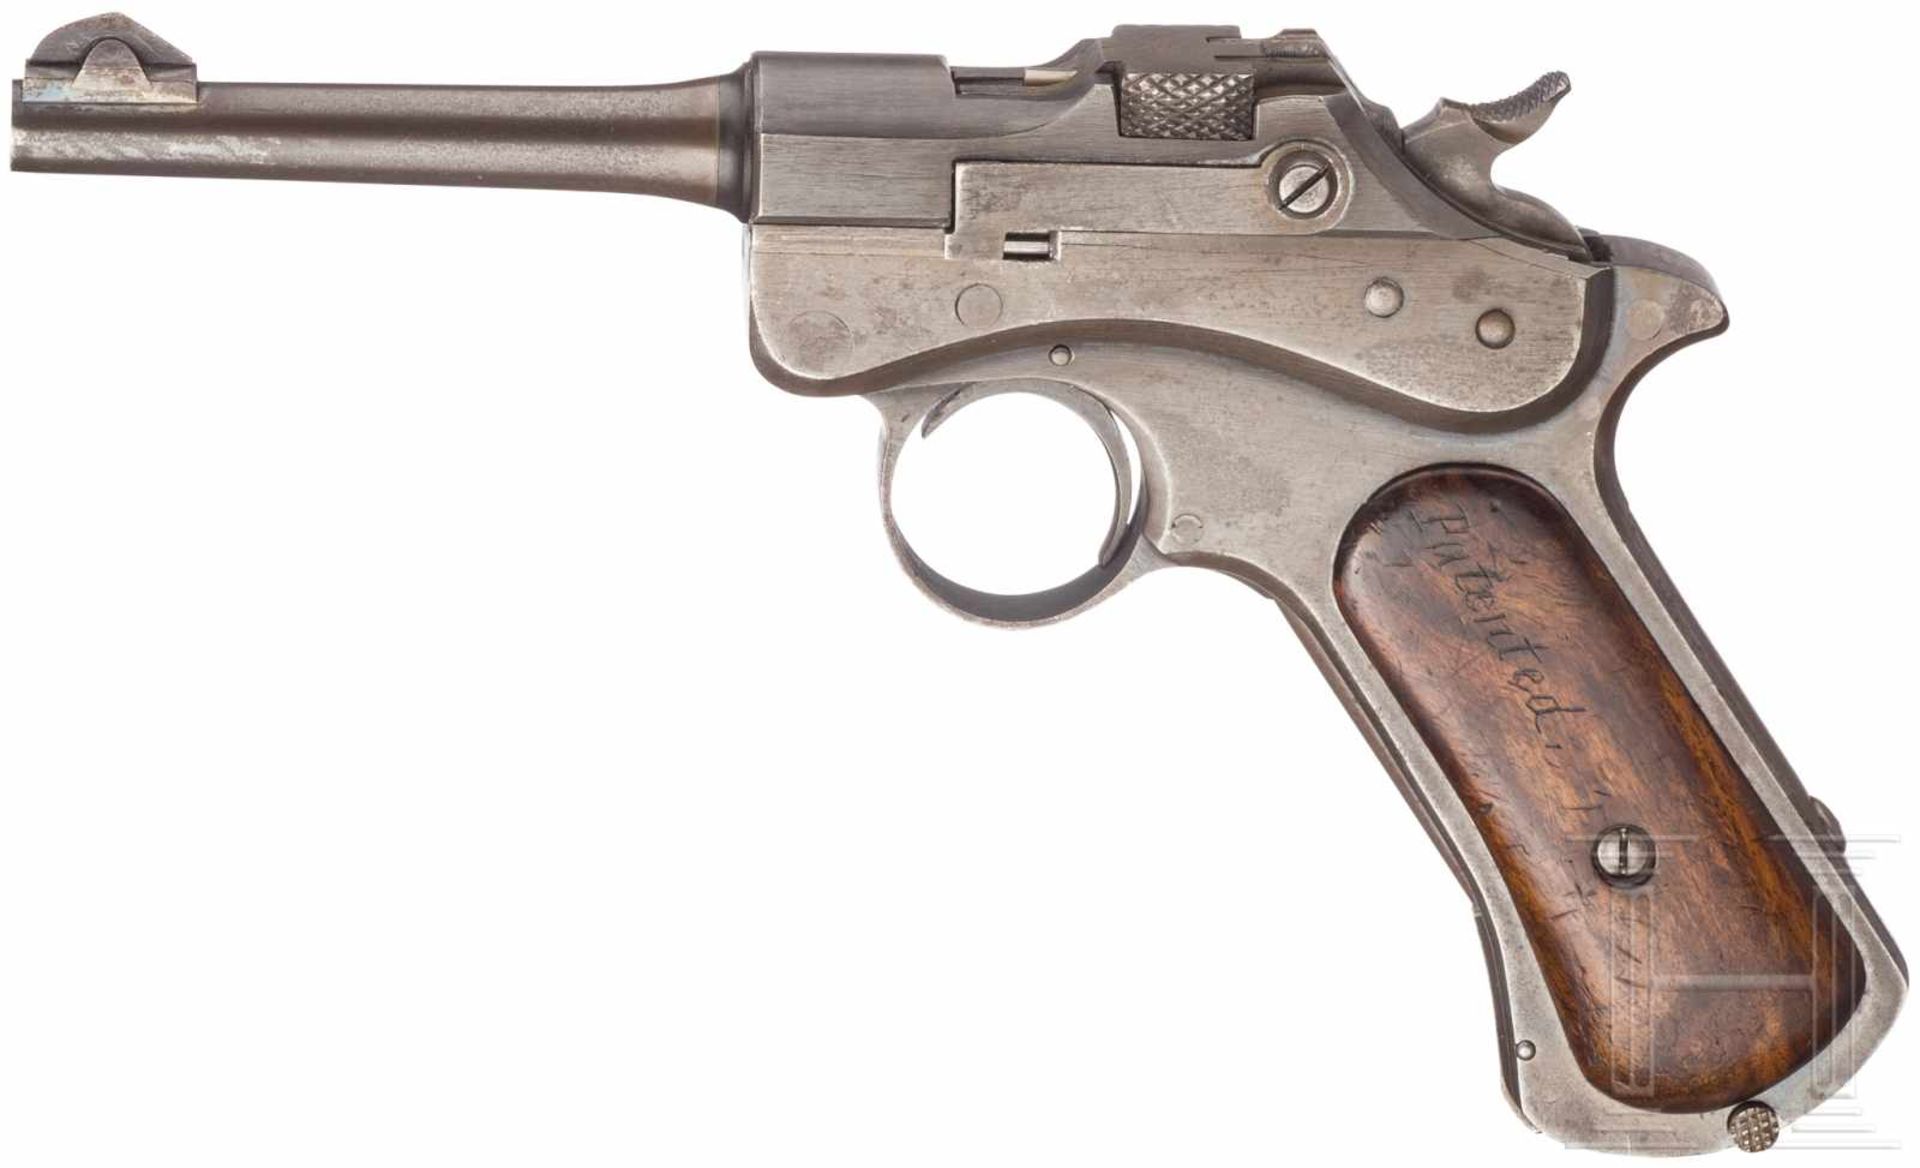 A Knoble automatic pistol